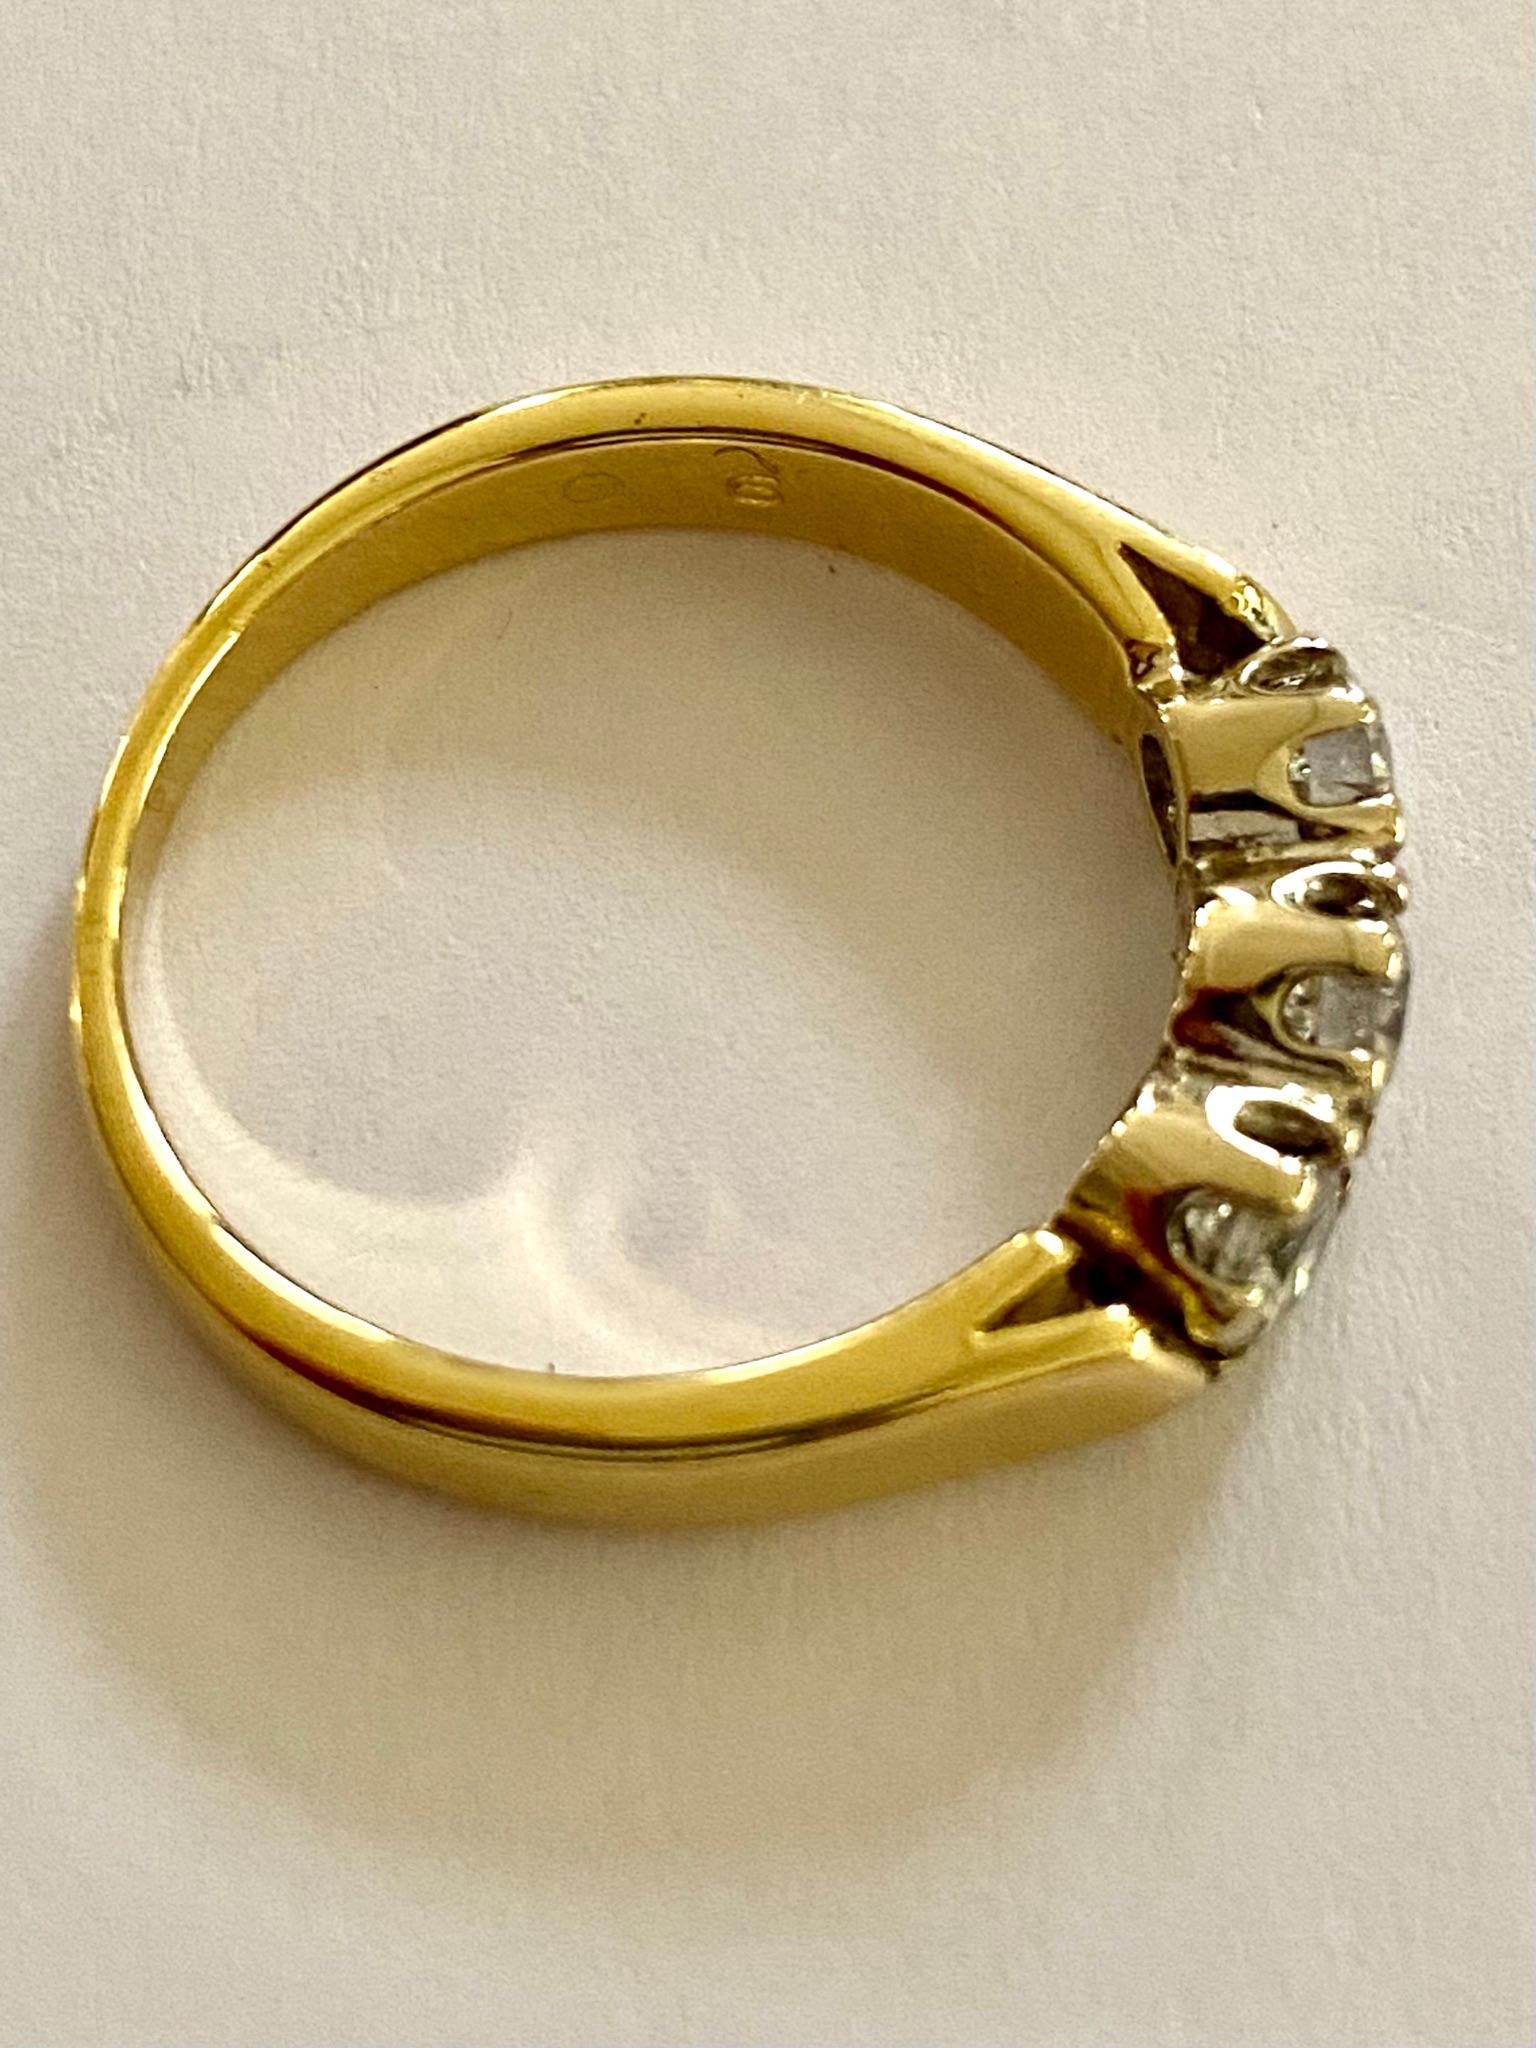 Brilliant Cut 18 Karat Yellow/White Gold Three Stones Ring 0.60 Carat Classic Dutch Ring